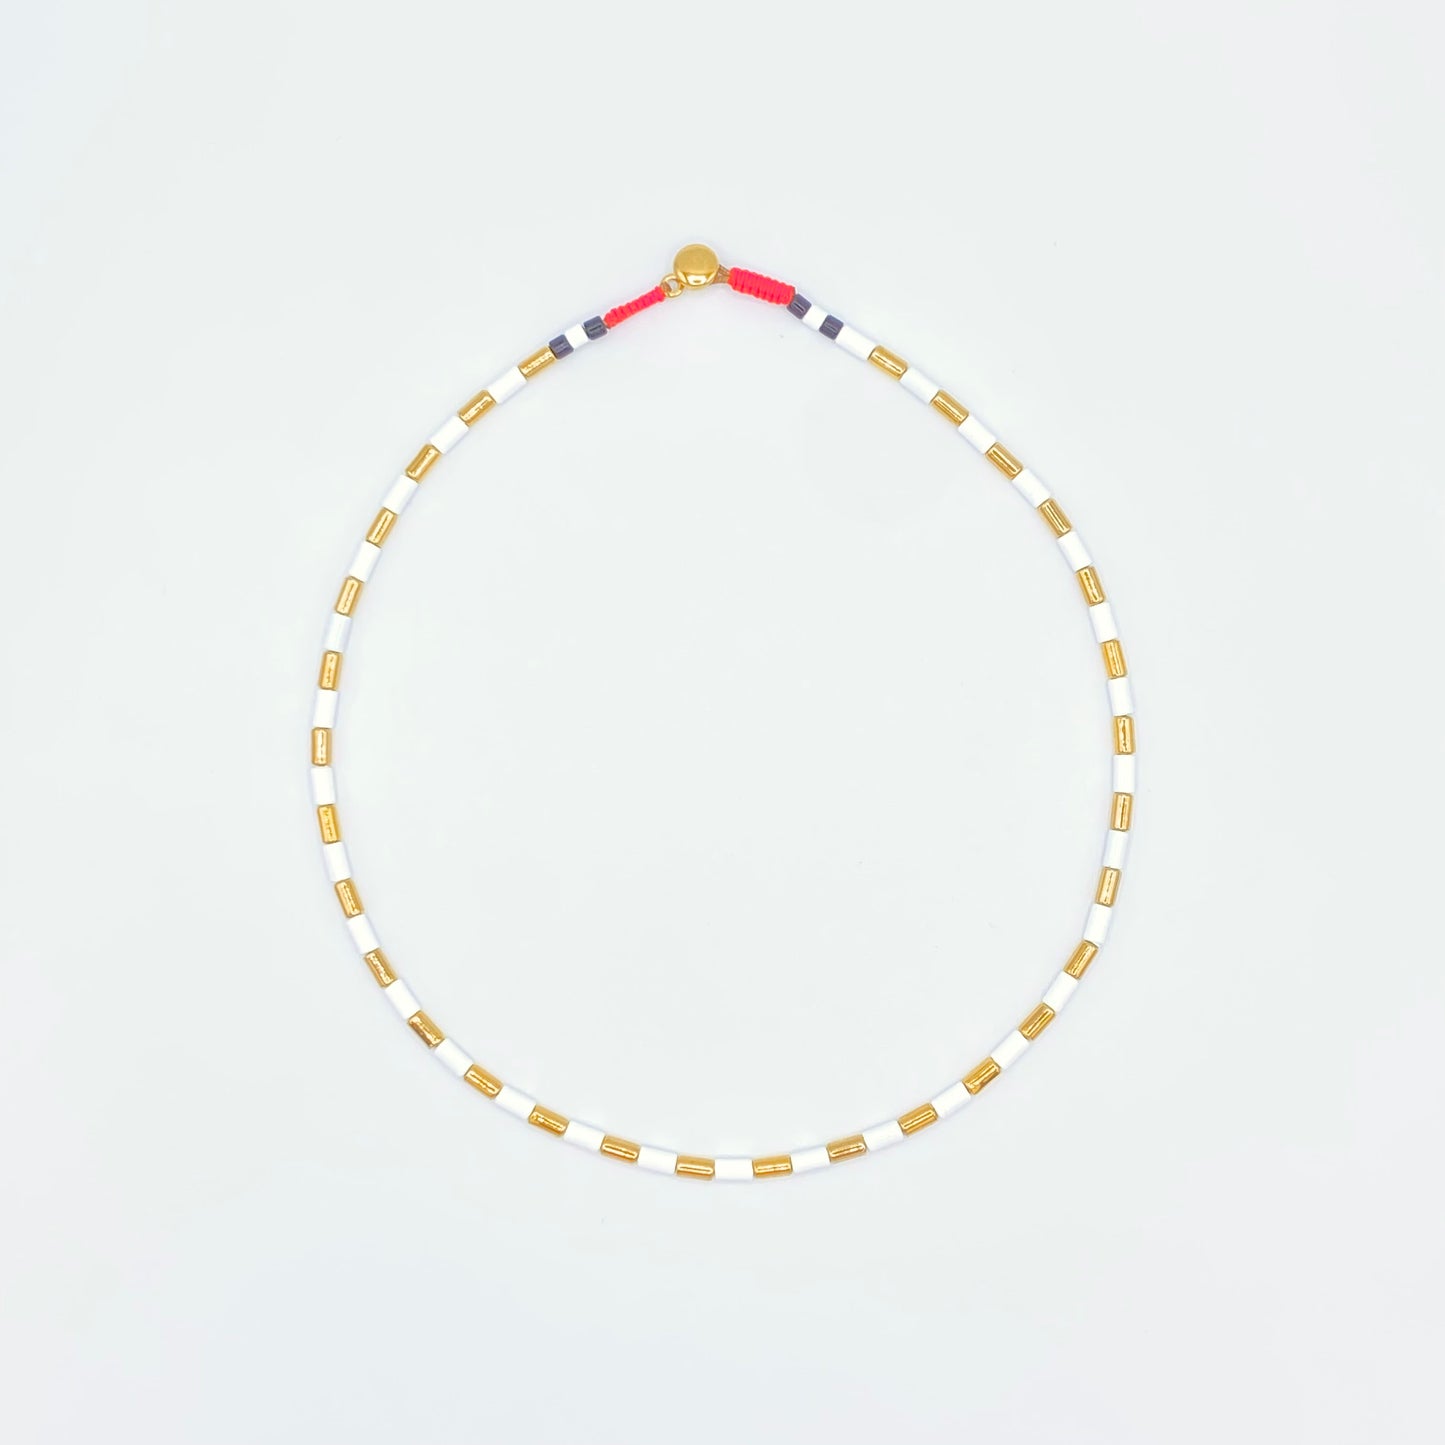 Gold & White Enamel Tile Beads Necklace and Bracelet, Tila Tile, Colorblock Choker